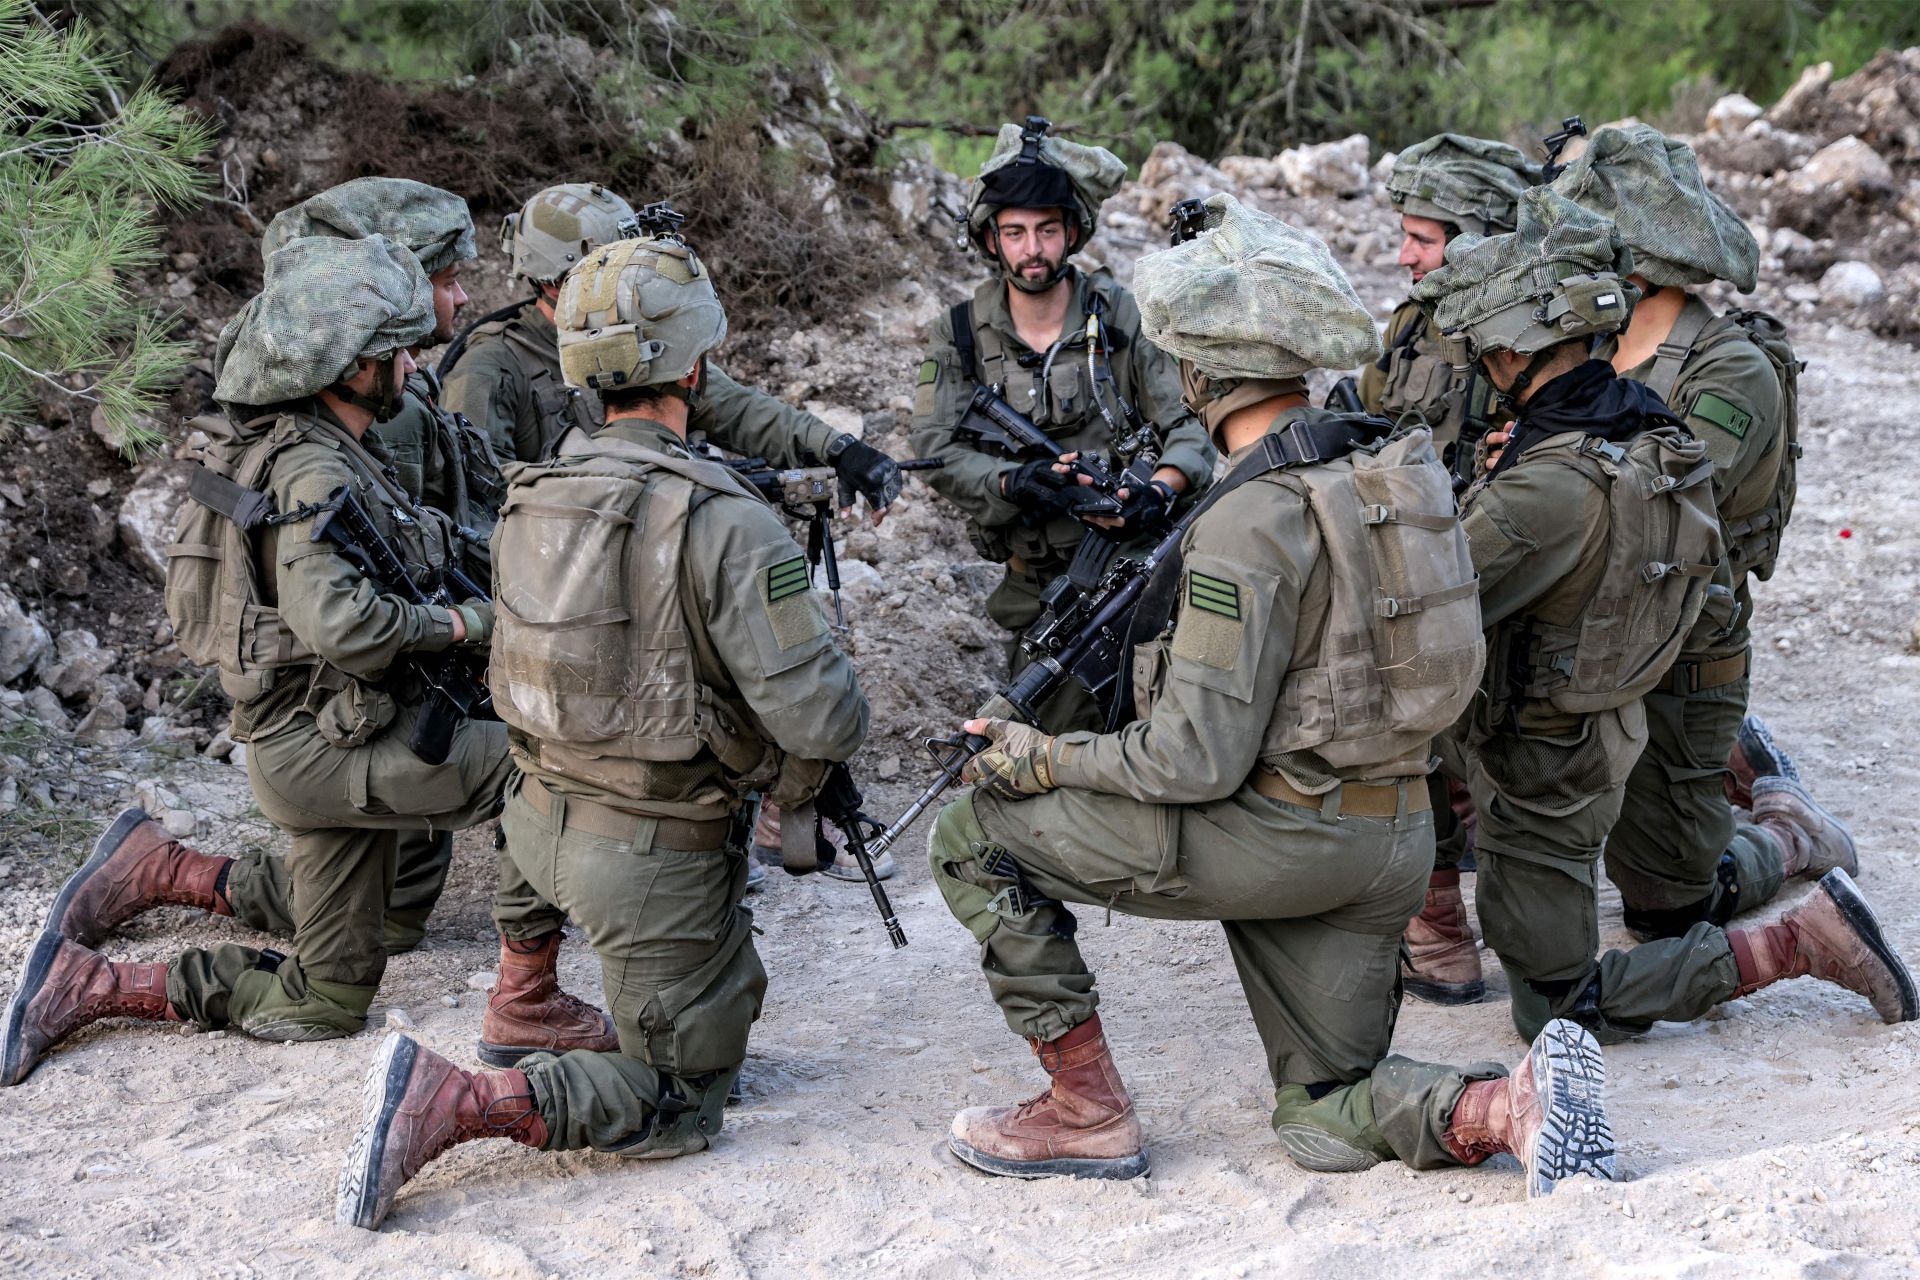 Israeli Uniforms, Hamas Tracksuits and a War of Symbols